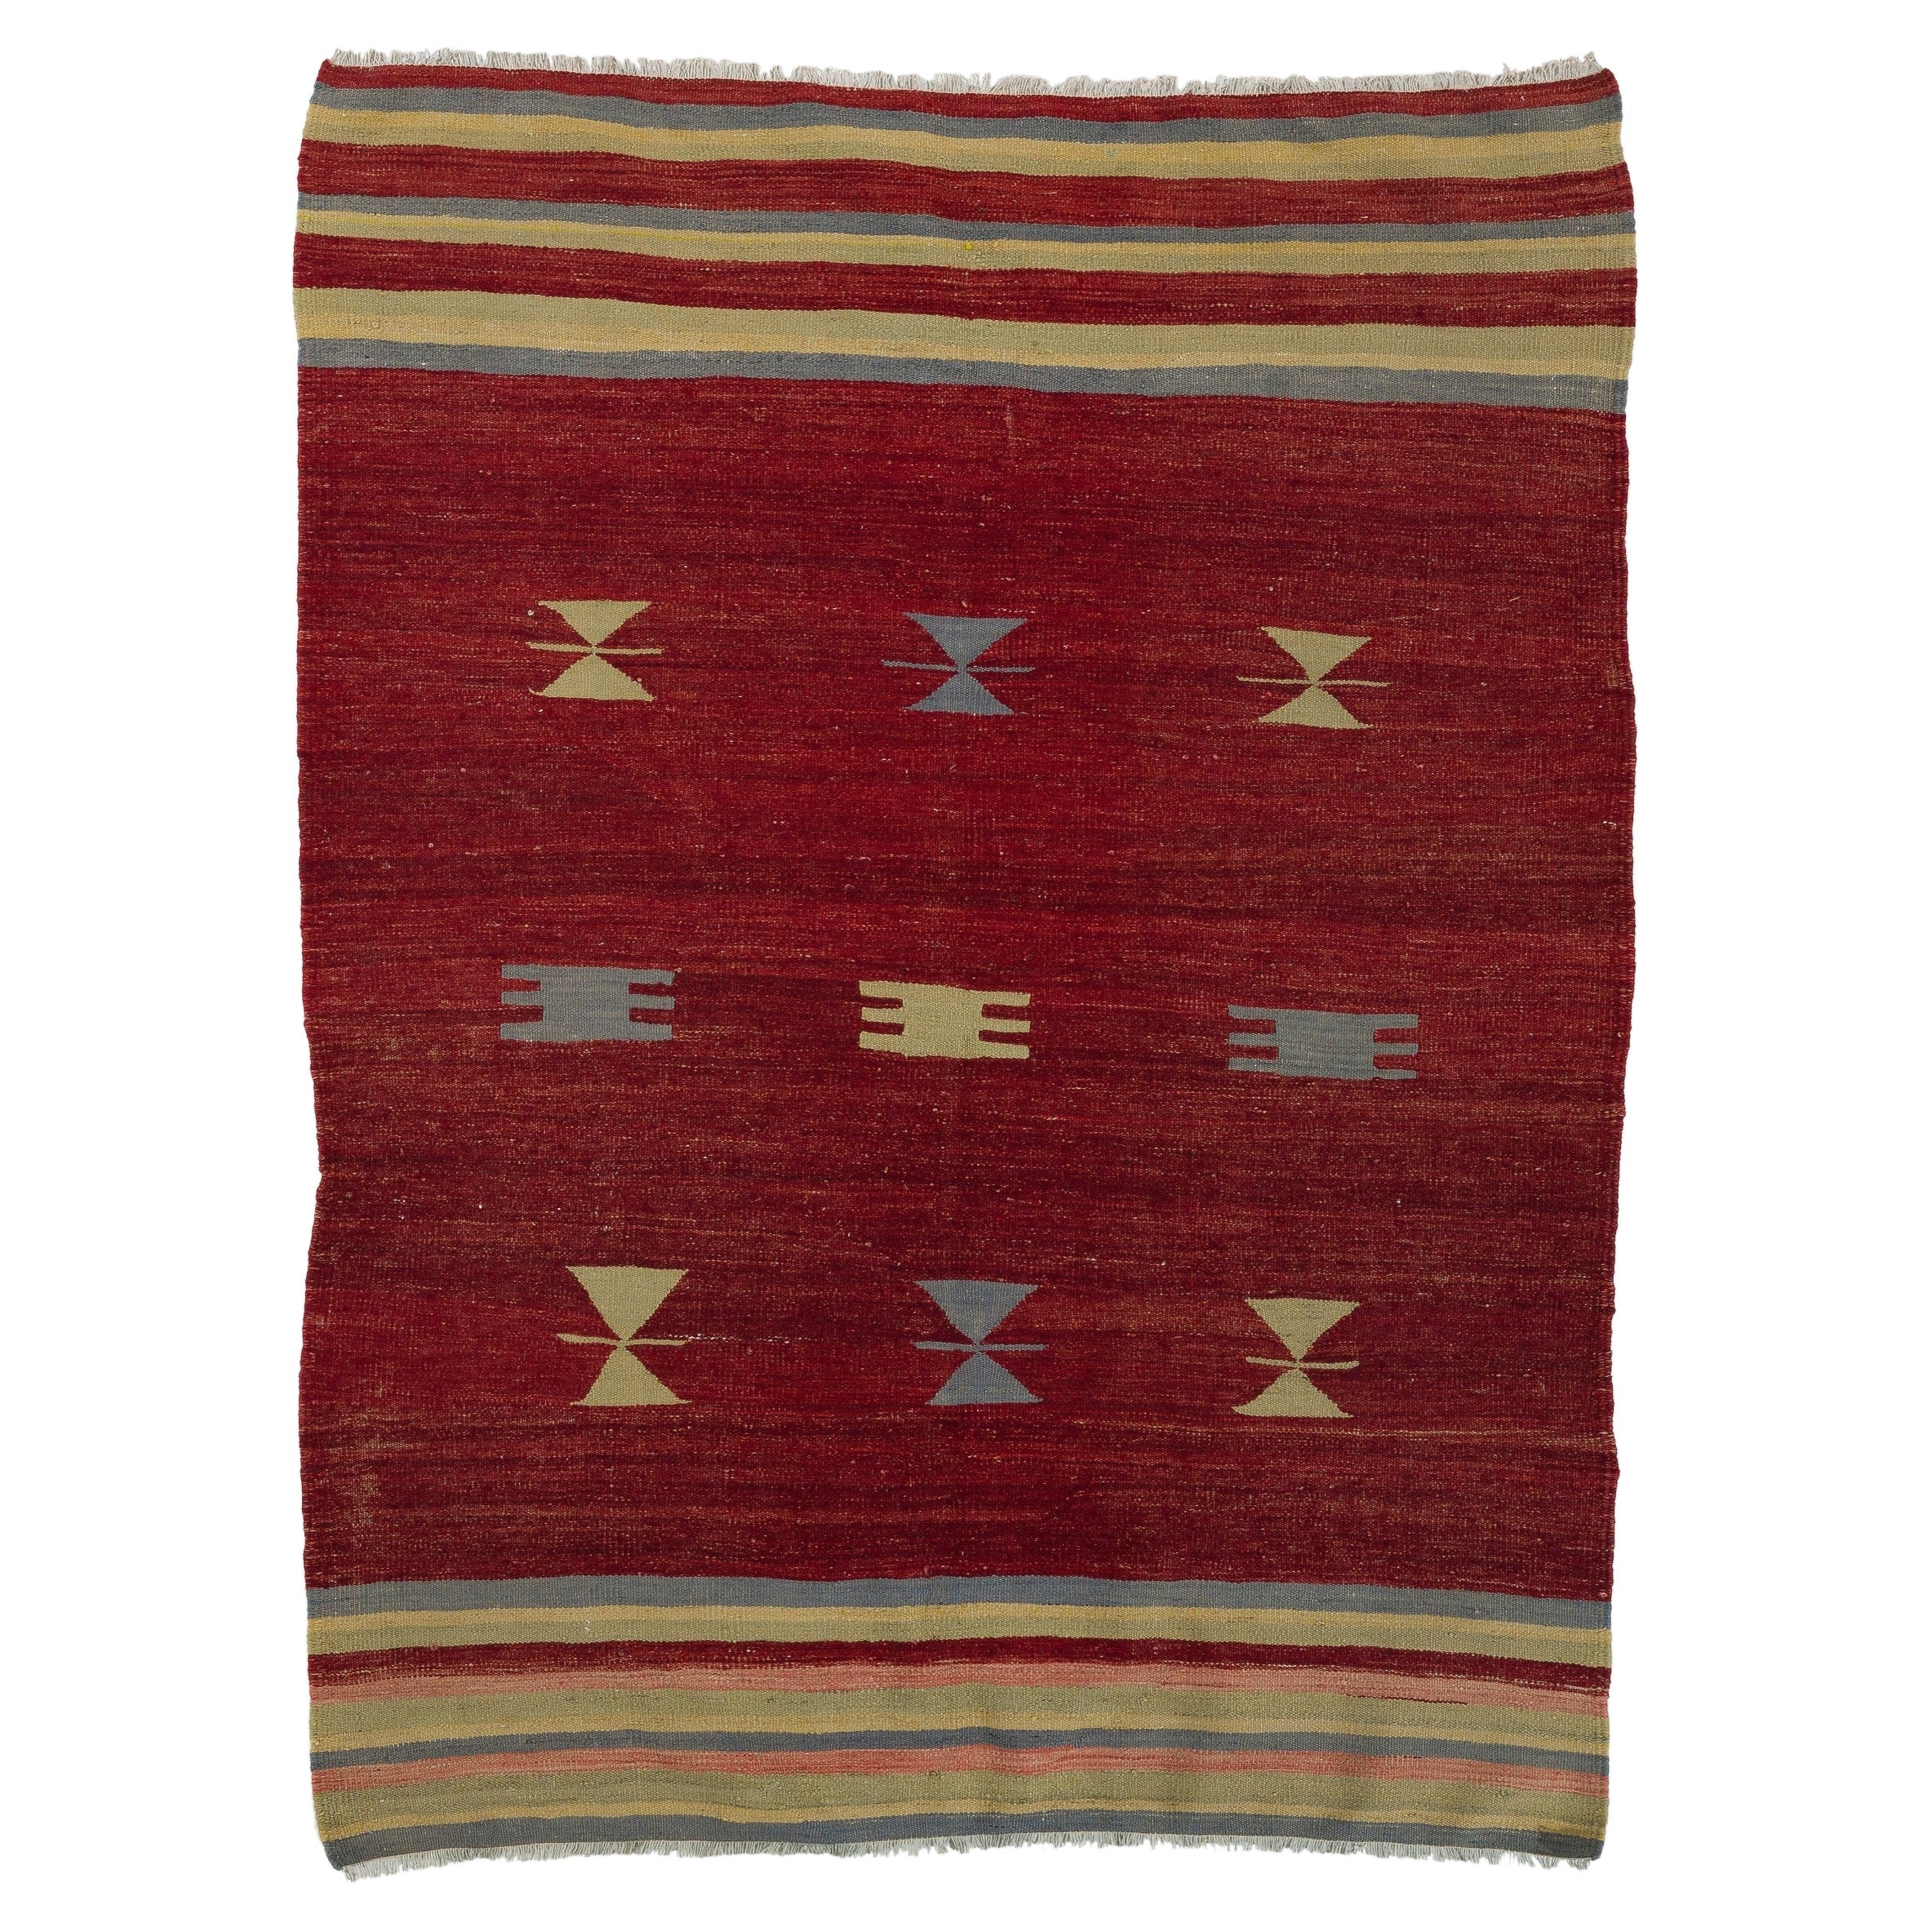 Tappeto Rug & Kilim in lana anatolica vintage tessuto a mano 4,2x5,5 piedi, a trama piatta